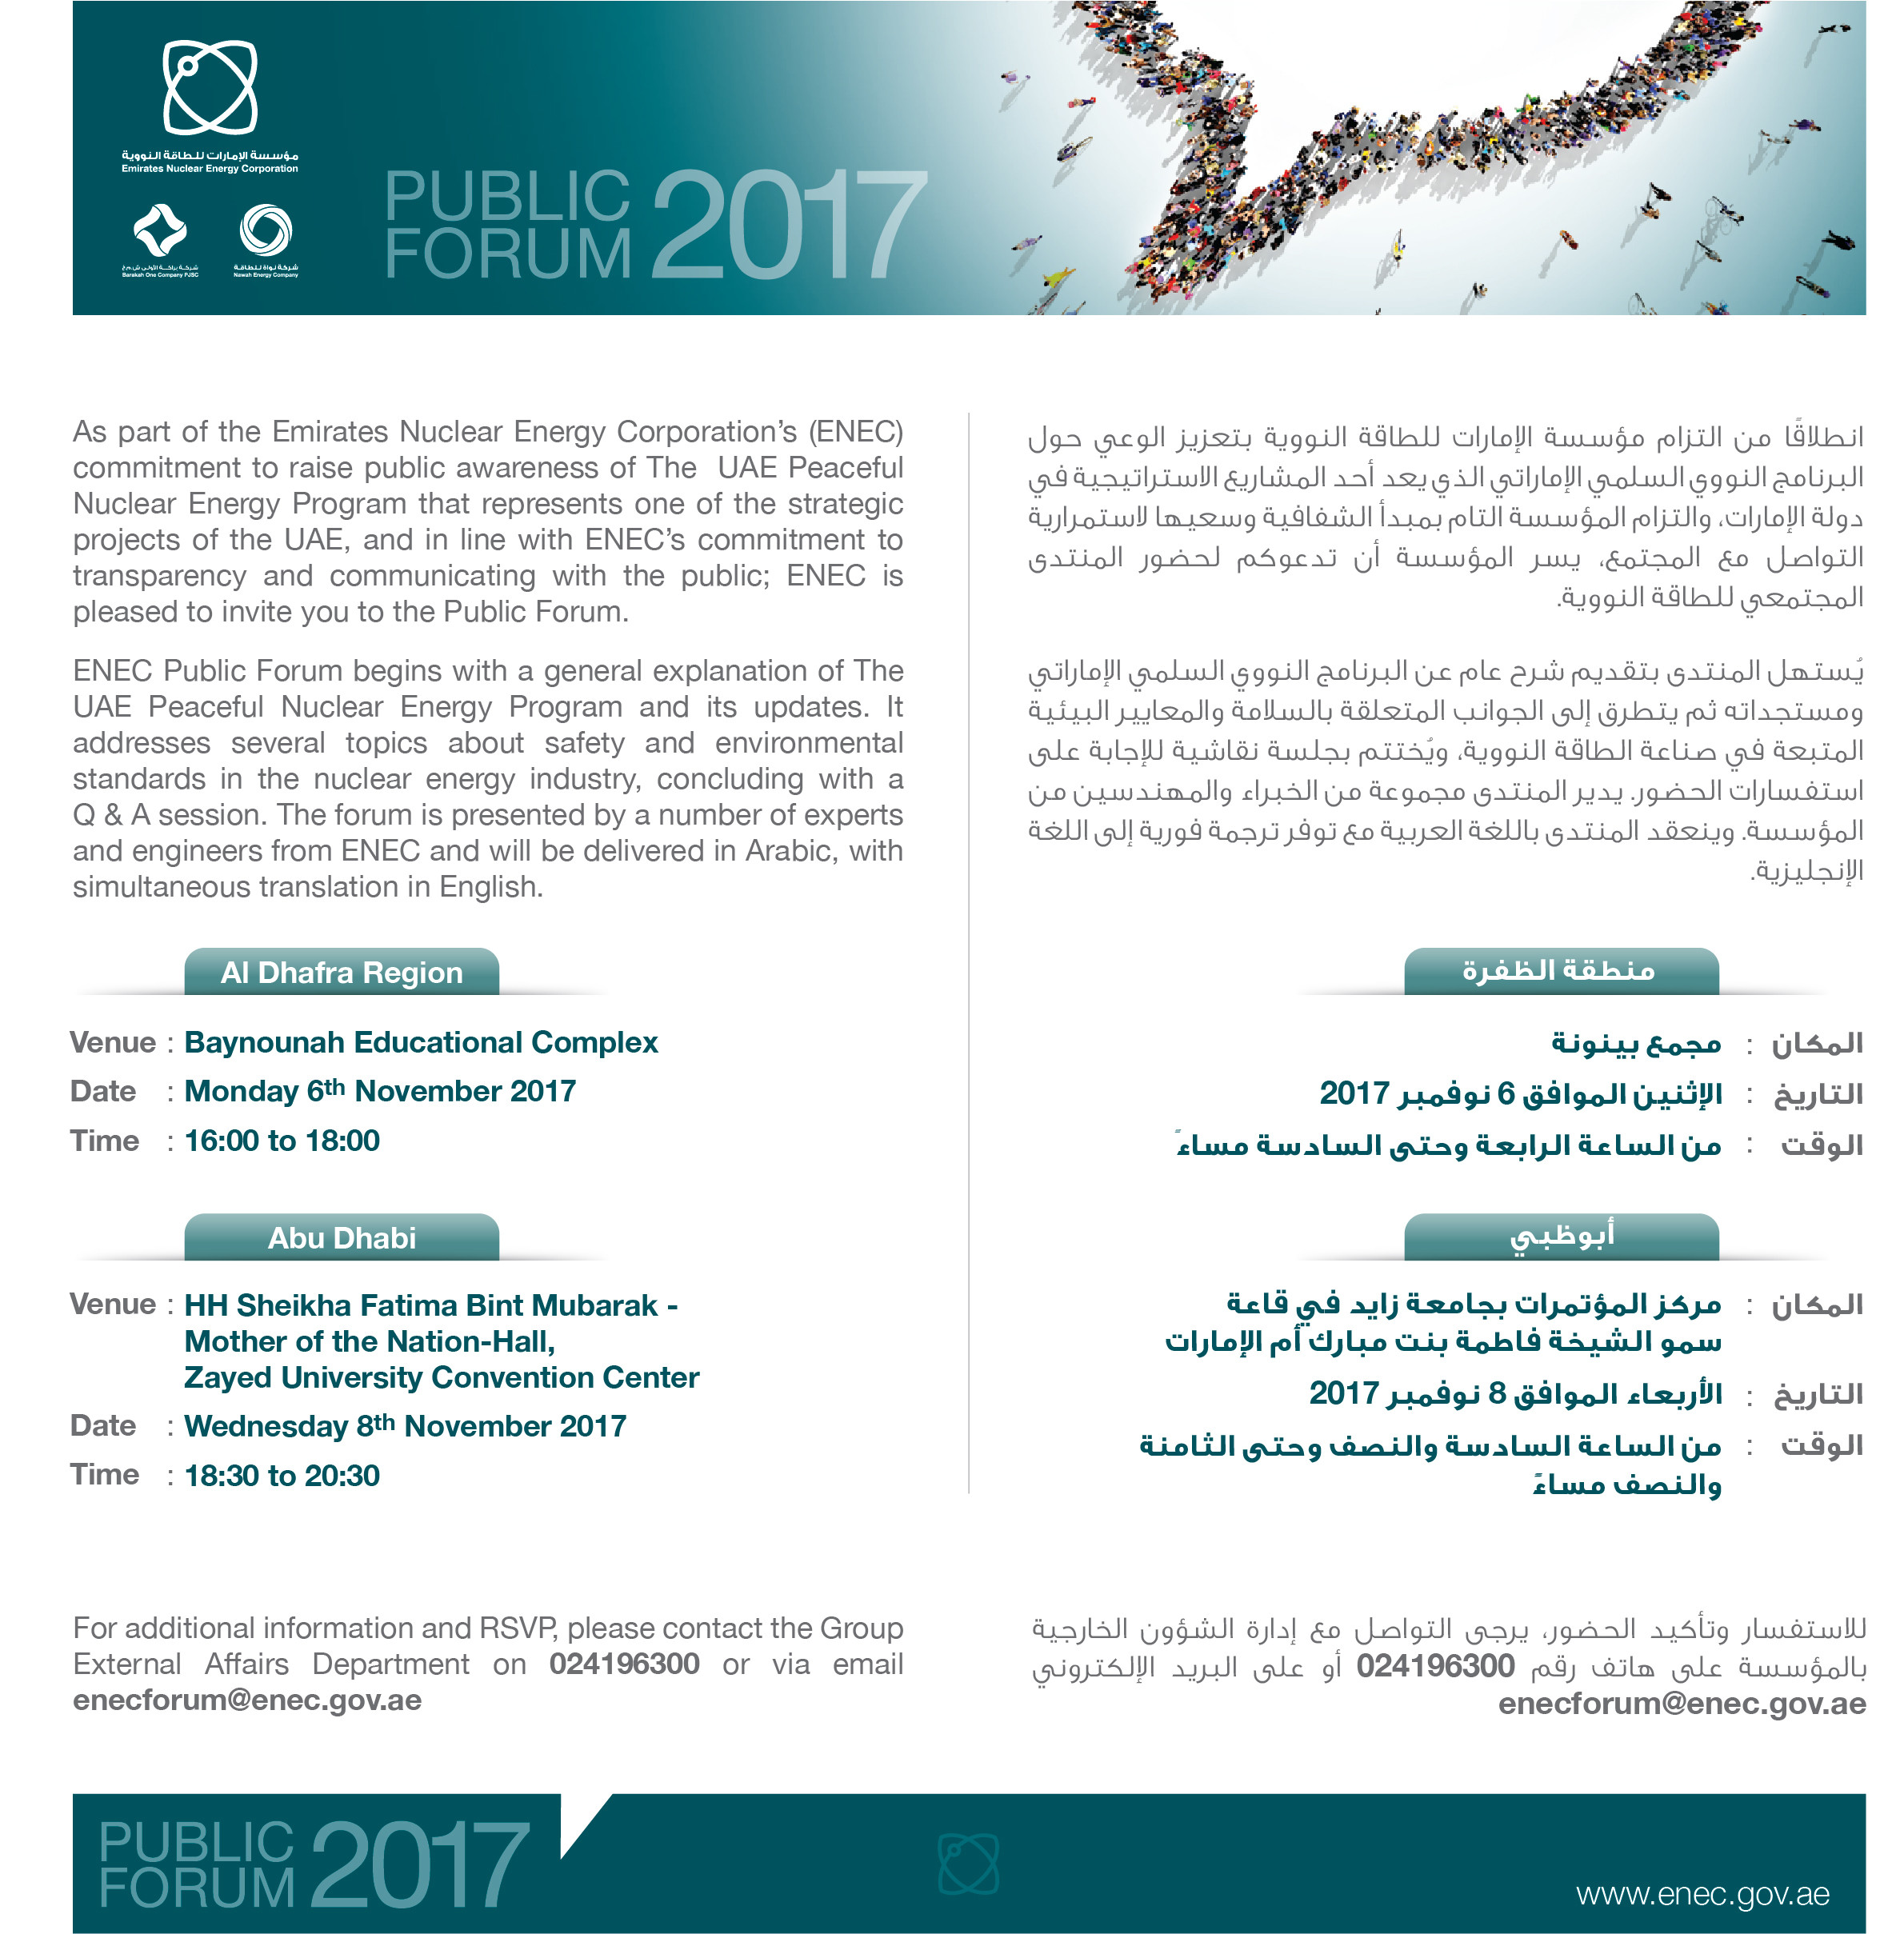 public-forum-2017-invitation-social-media-59fb0697d96a3.jpg (original)